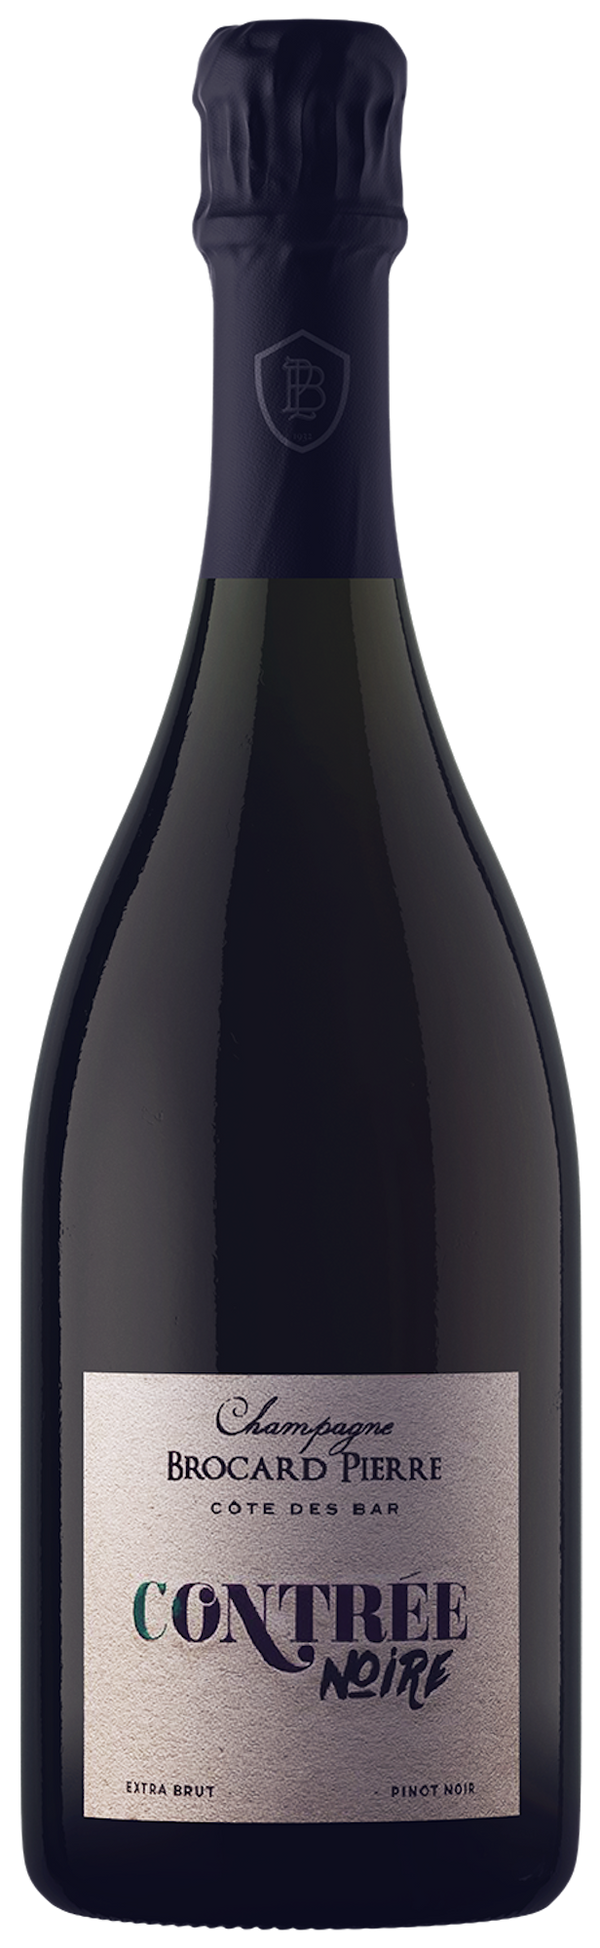 Champagne Brocard Pierre Contree Noire 2015